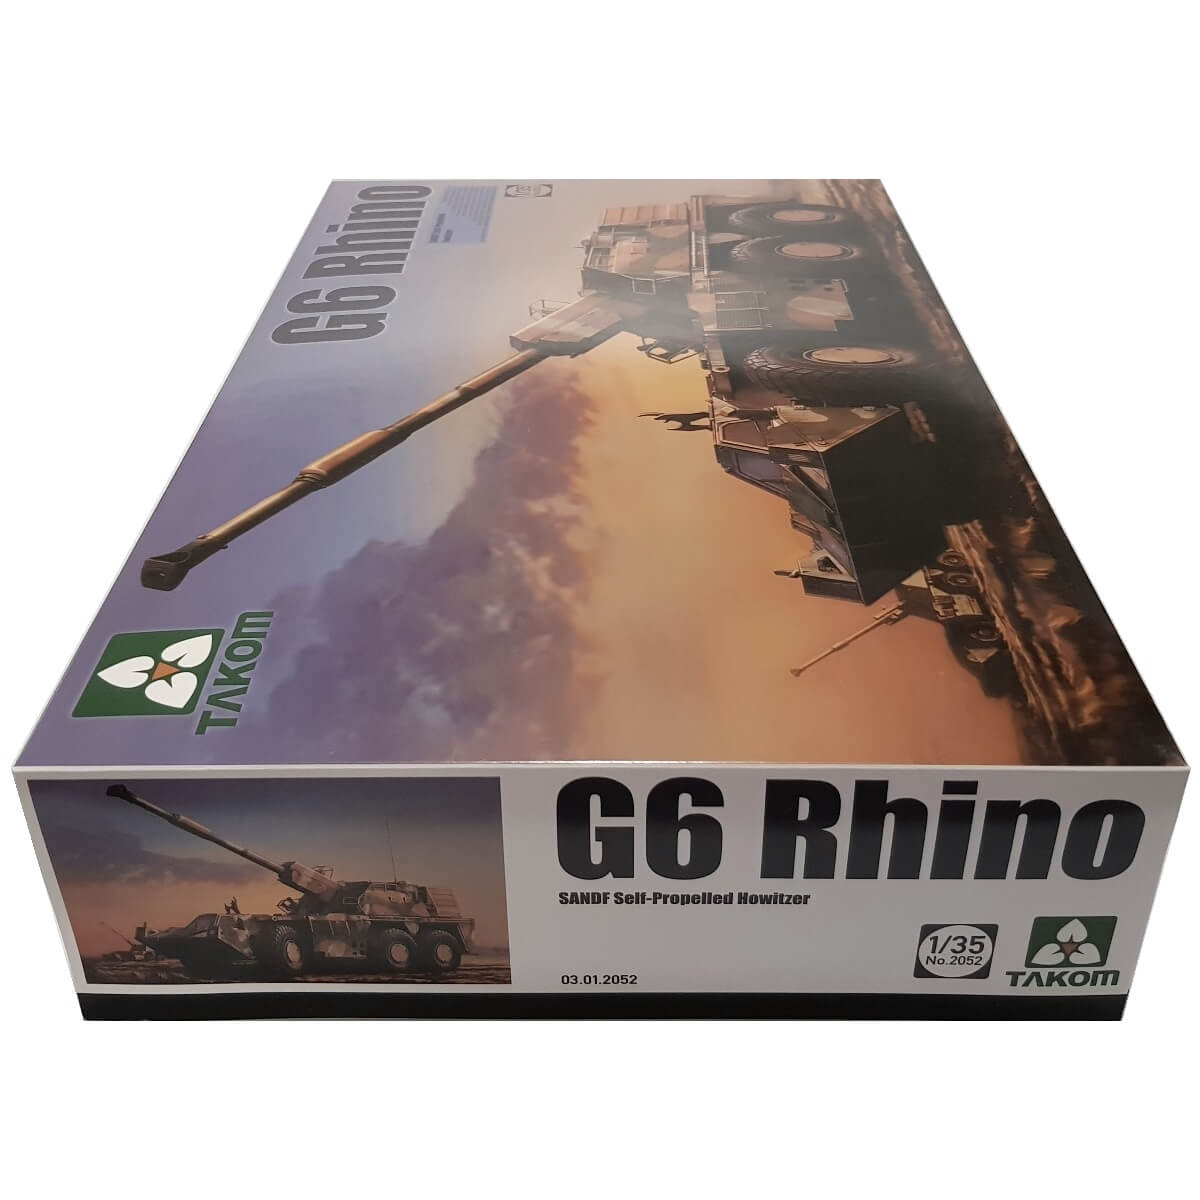 1:35 G6 Rhino SANDF Self-Propelled Howitzer - TAKOM